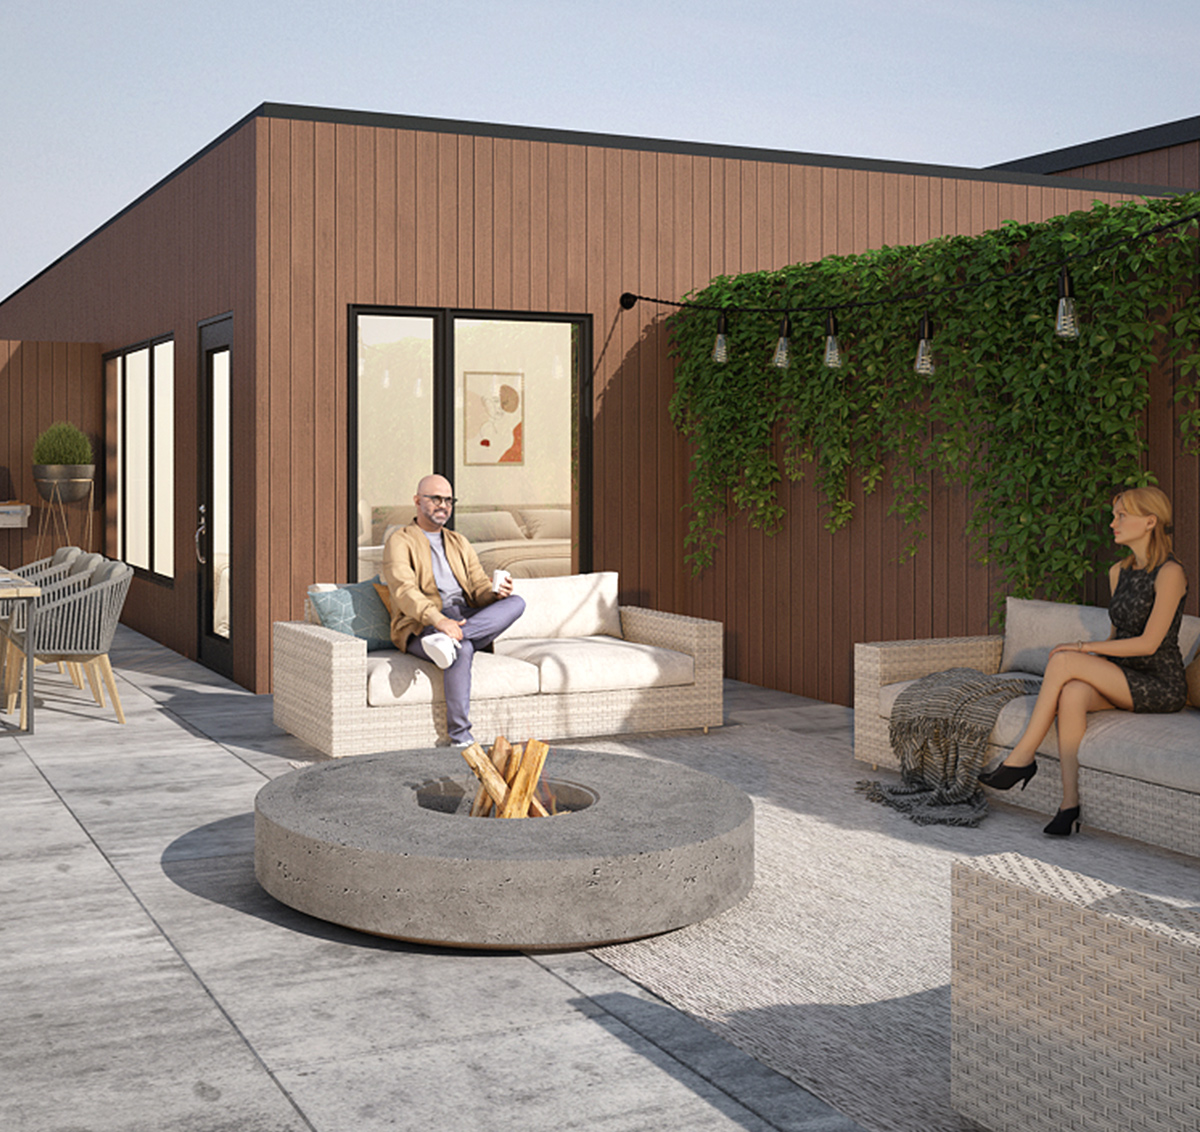 Terrace offered to condominium units with mezzanine at the Estrada condominiums project